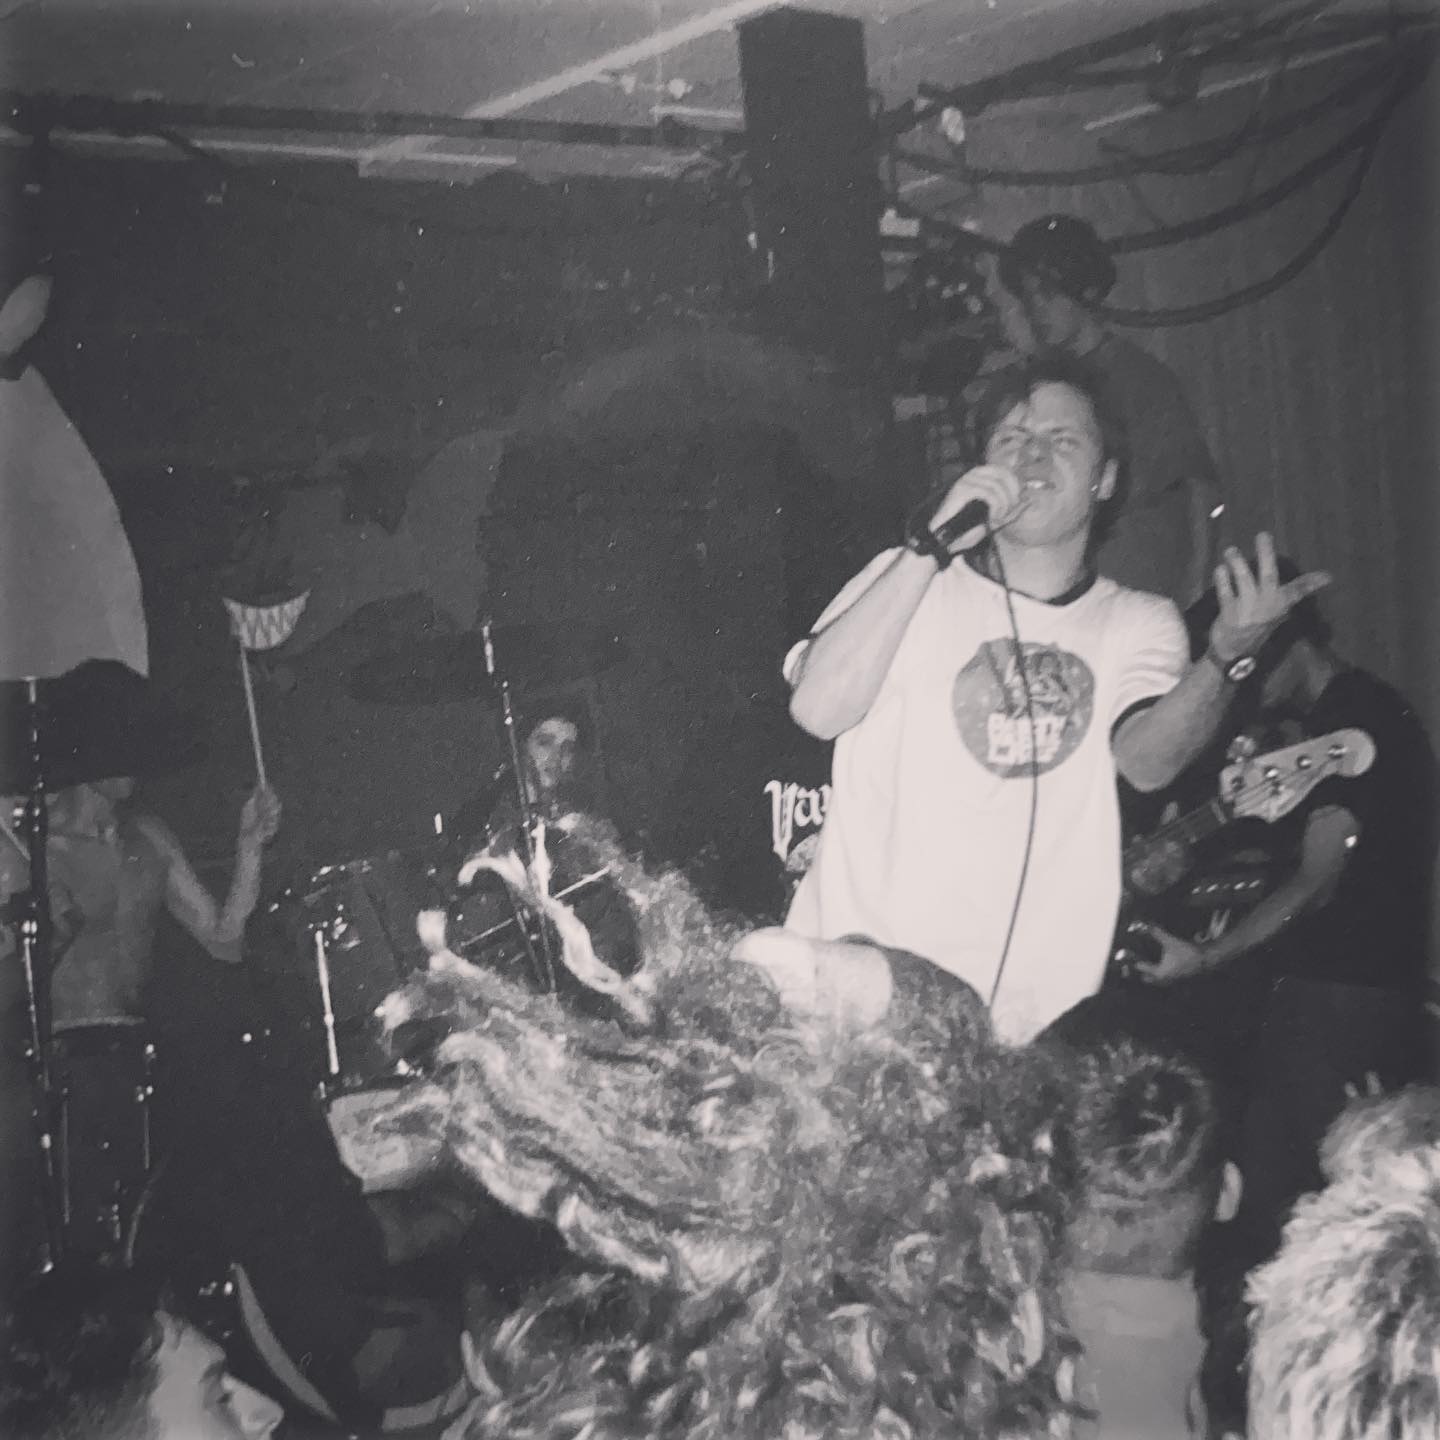 Unbroken - Goudvishal Arnhem - 3 January 1995 #straightedge #hardcore #metal @unbroken_hardcore